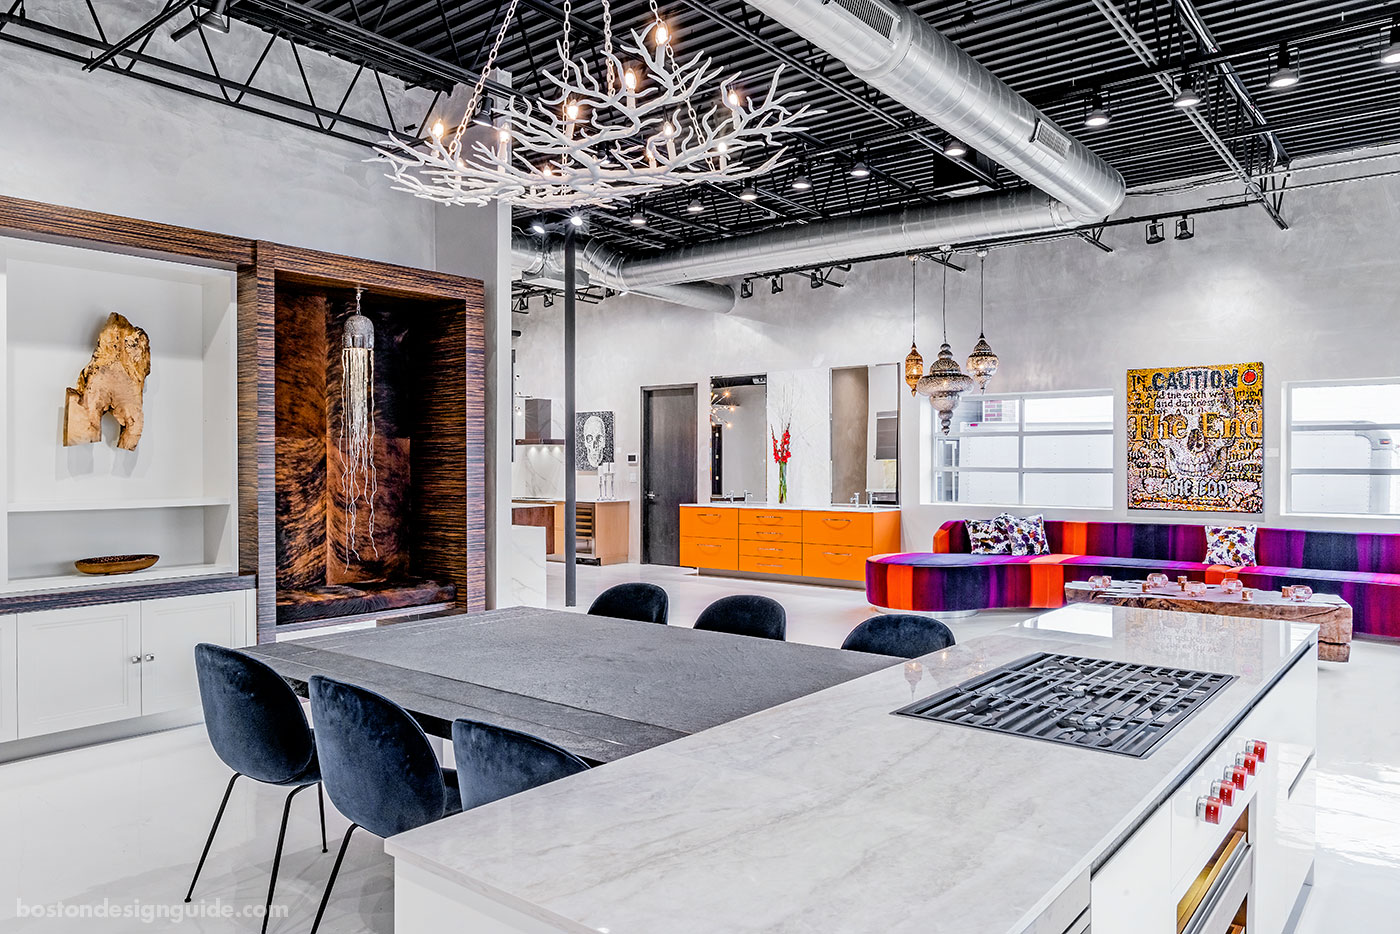 Newton Kitchens & Design's new showroom space